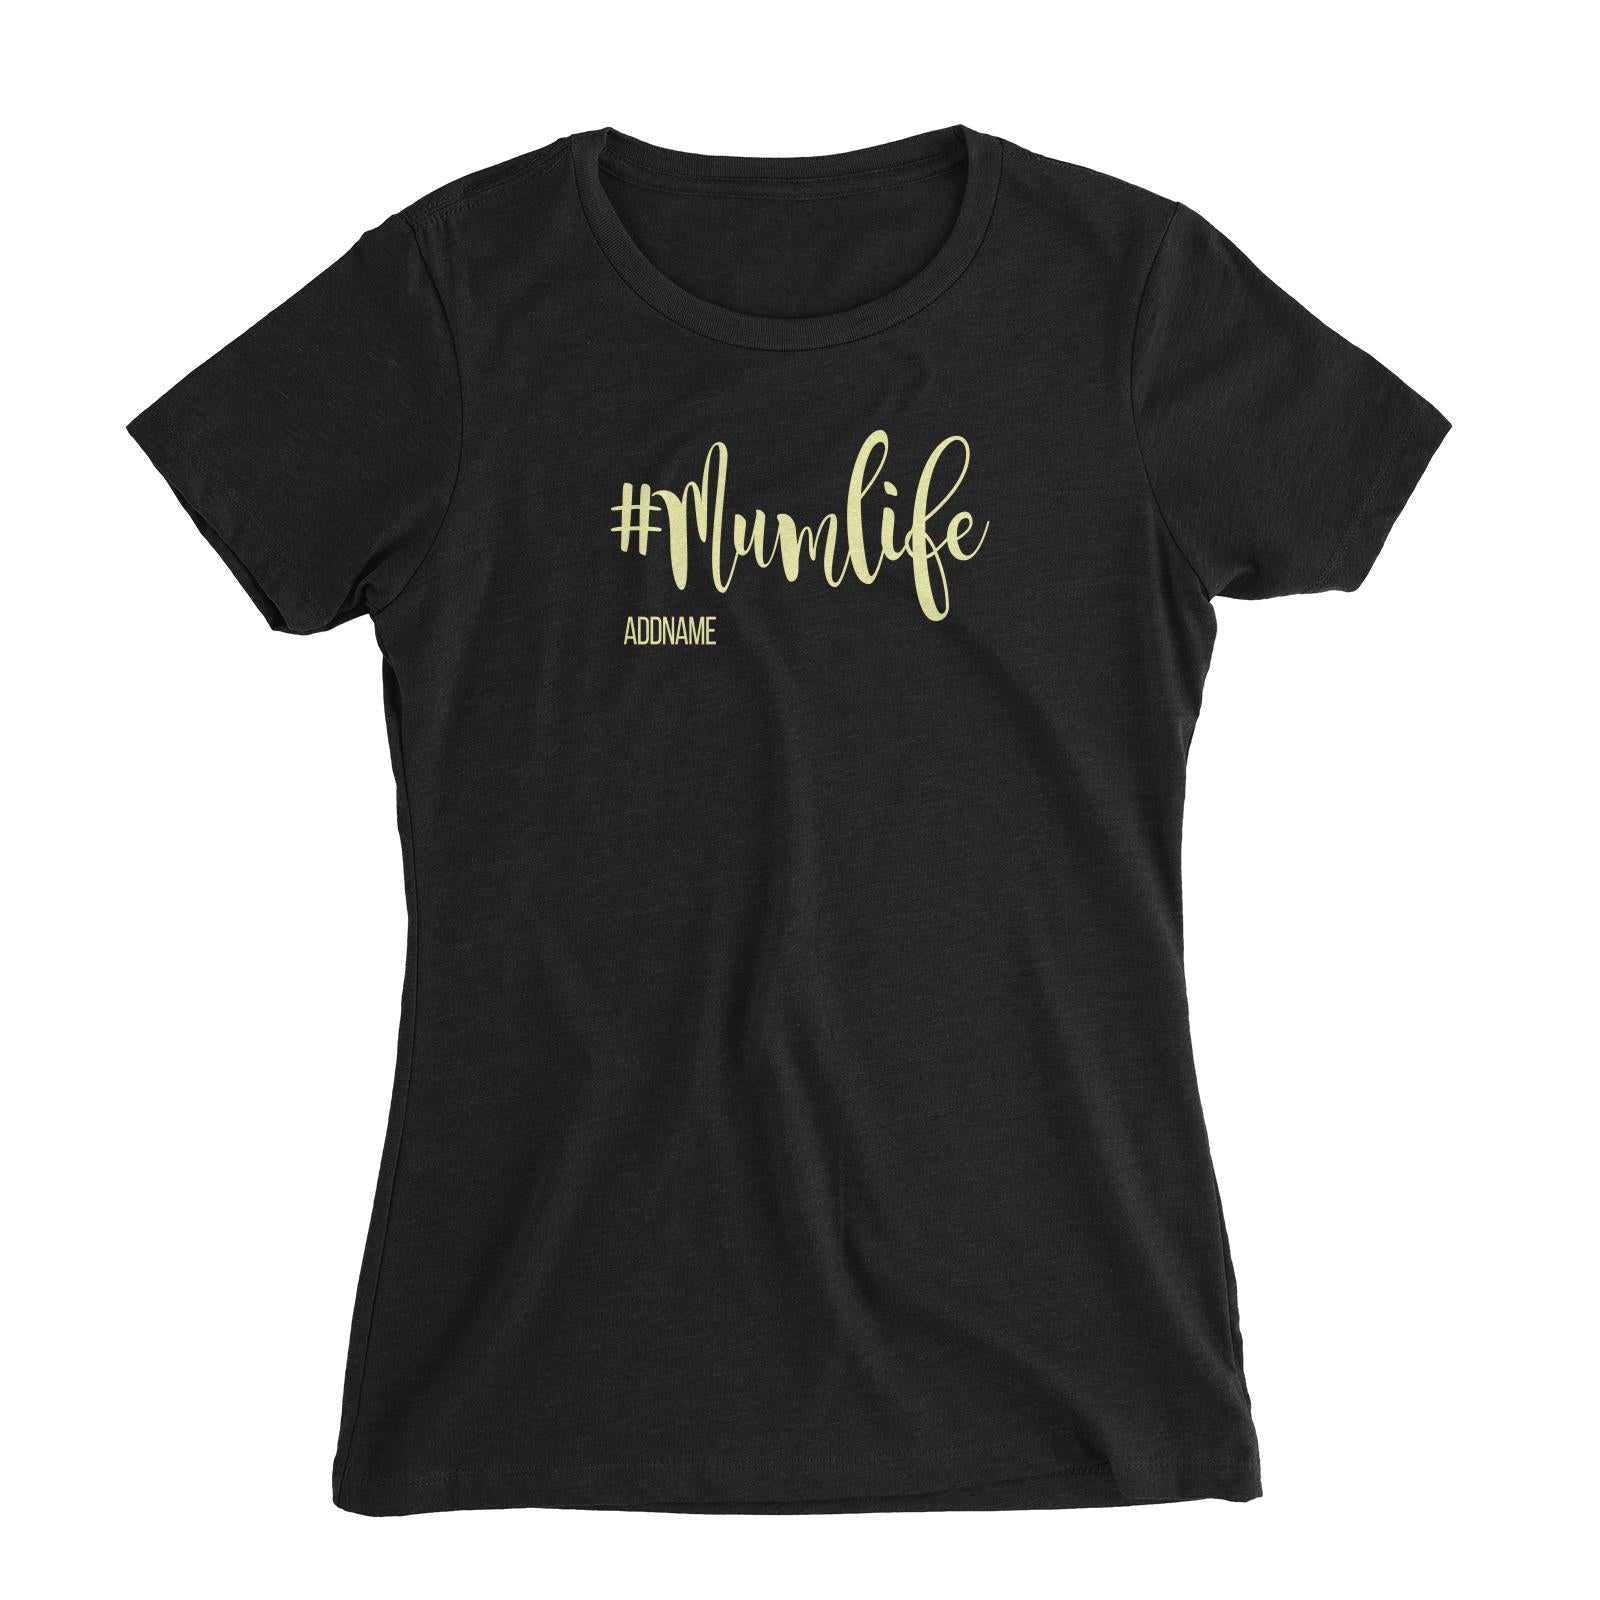 Mum Life Hashtag Women's Slim Fit T-Shirt